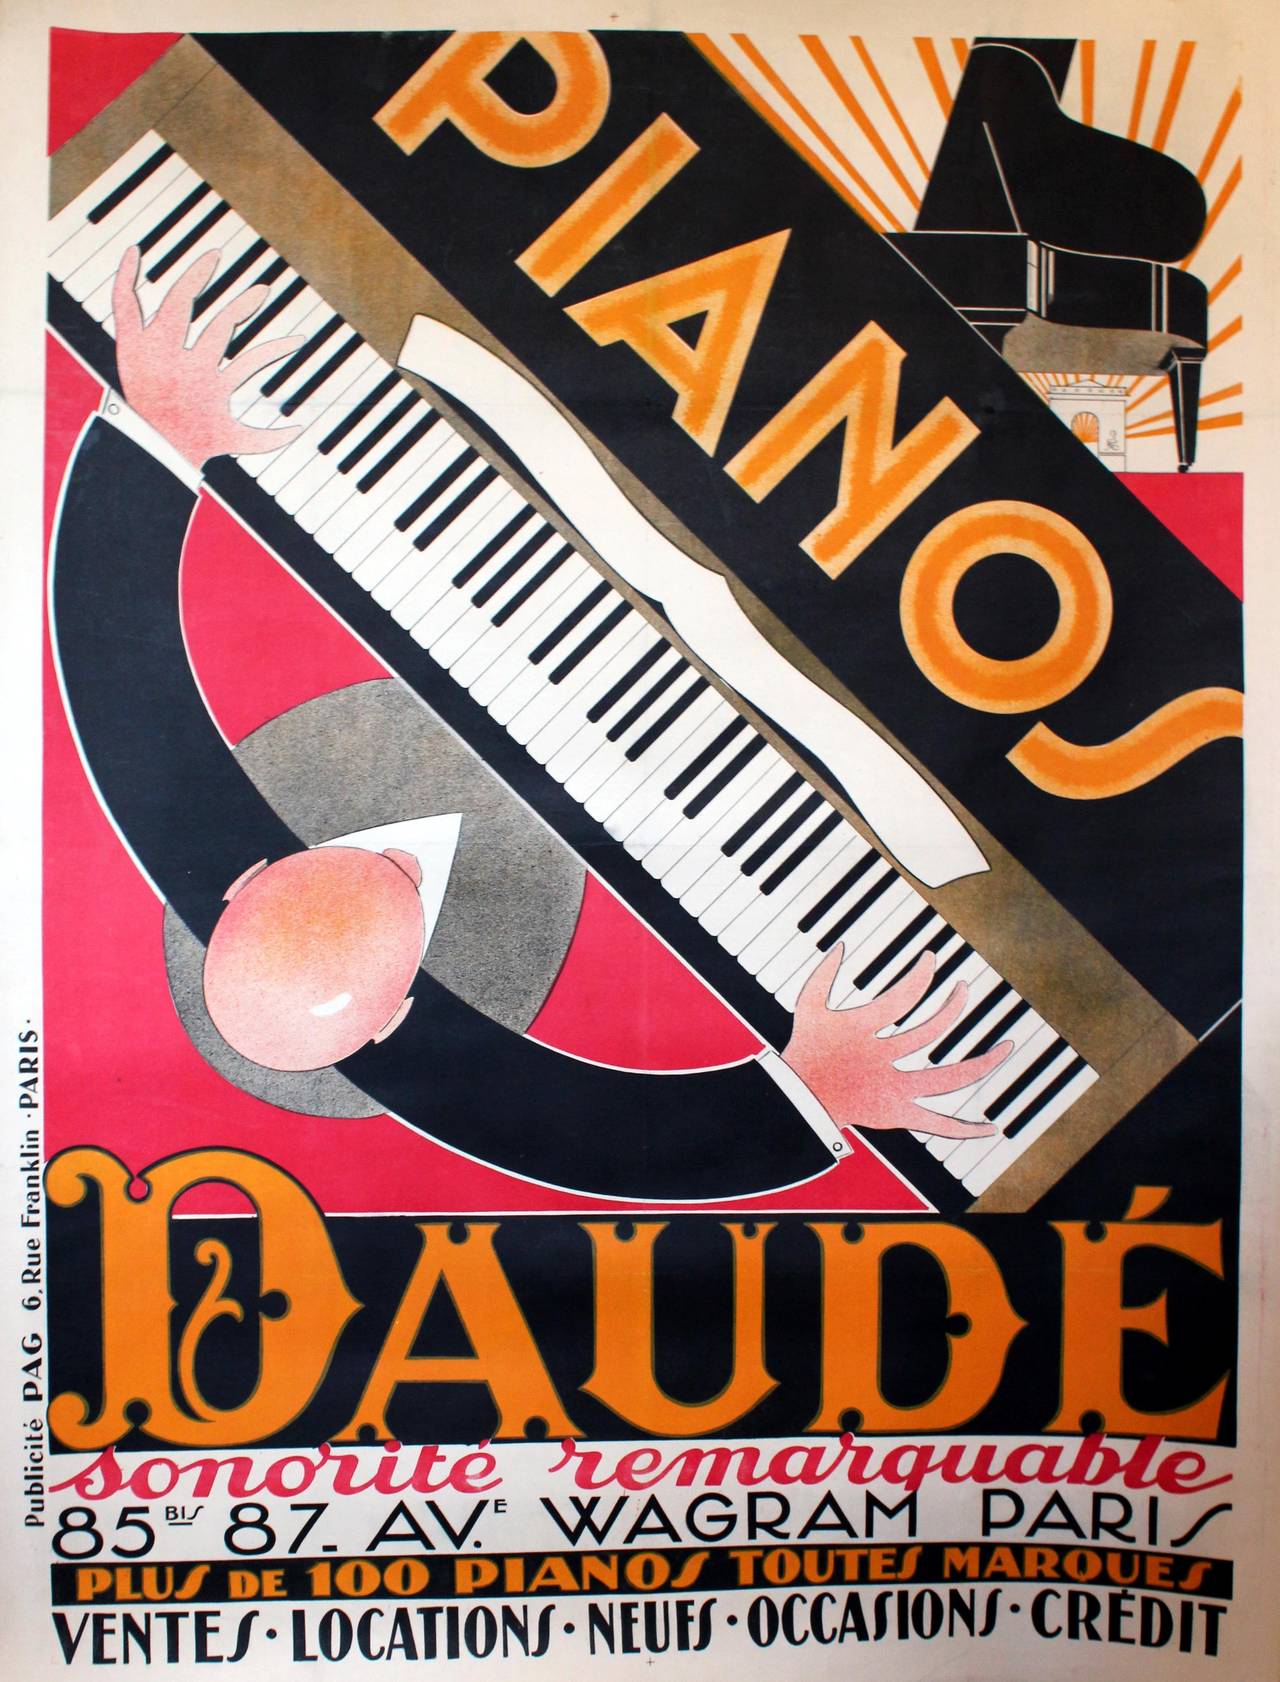 Andre Daude Print - Large Original Vintage 1920s Art Deco Advertising Poster For Piano Daude, Paris